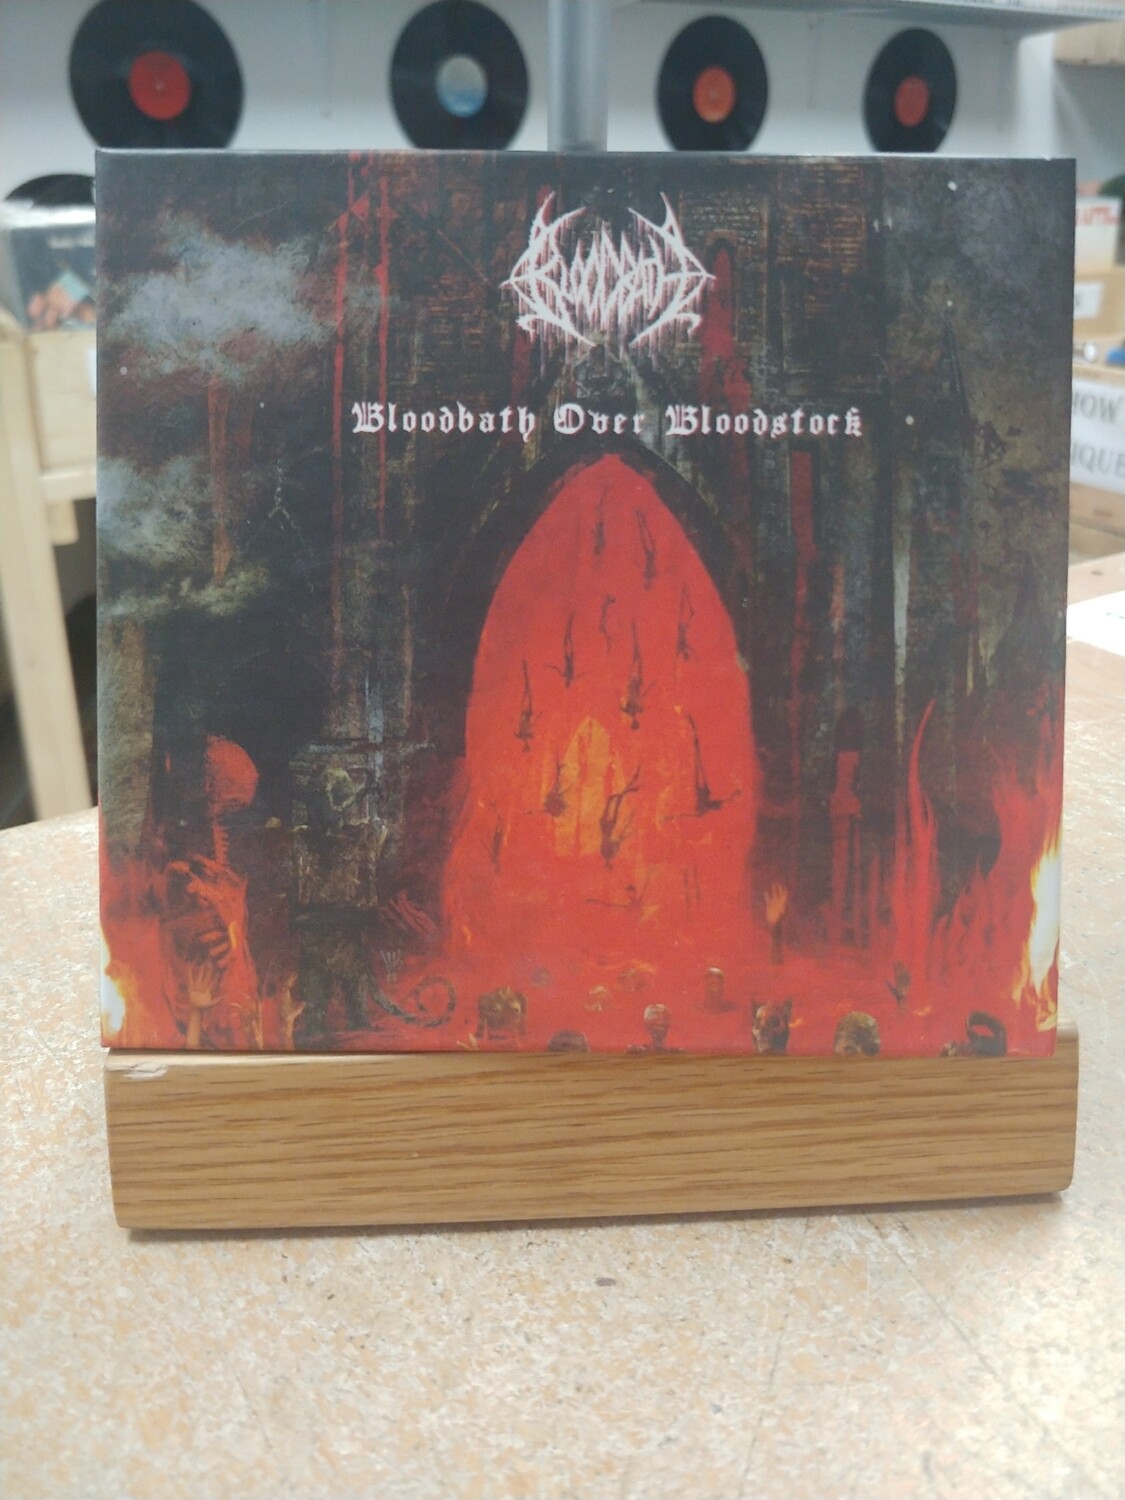 Bloodbath - Bloodbath Over Bloodstork (CD)